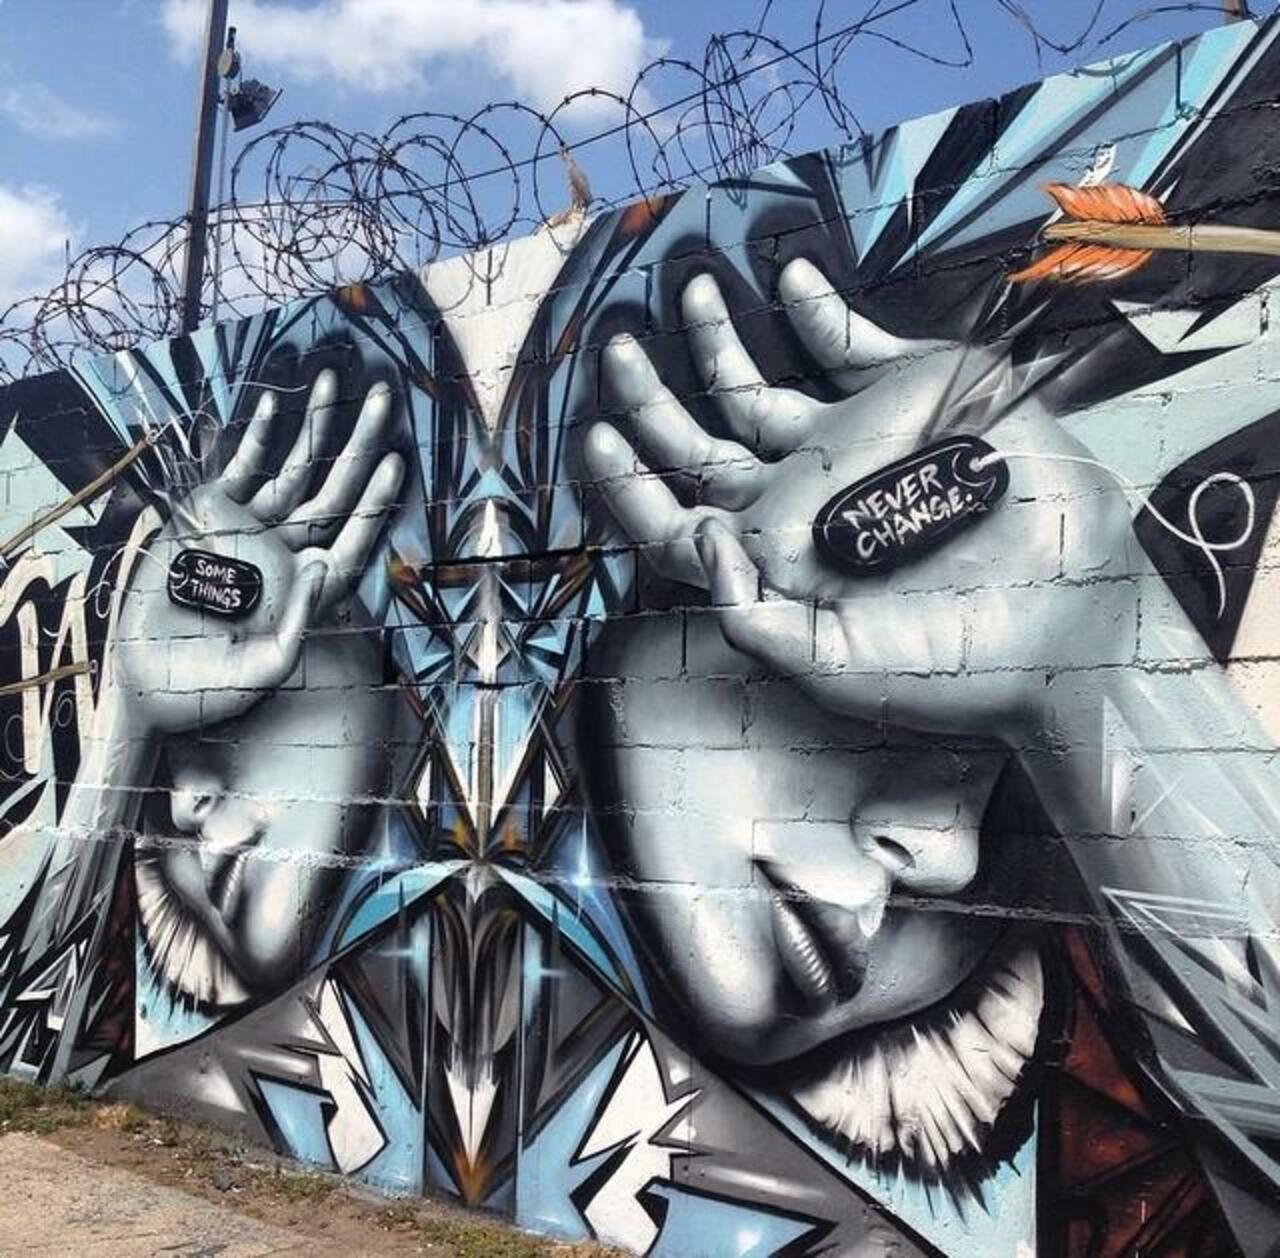 RT @designopinion: Artist @StarFighterA new Street Art mural titled 'Some Things Never Change' #art #mural #graffiti #streetart http://t.co/v7Wqyon06I